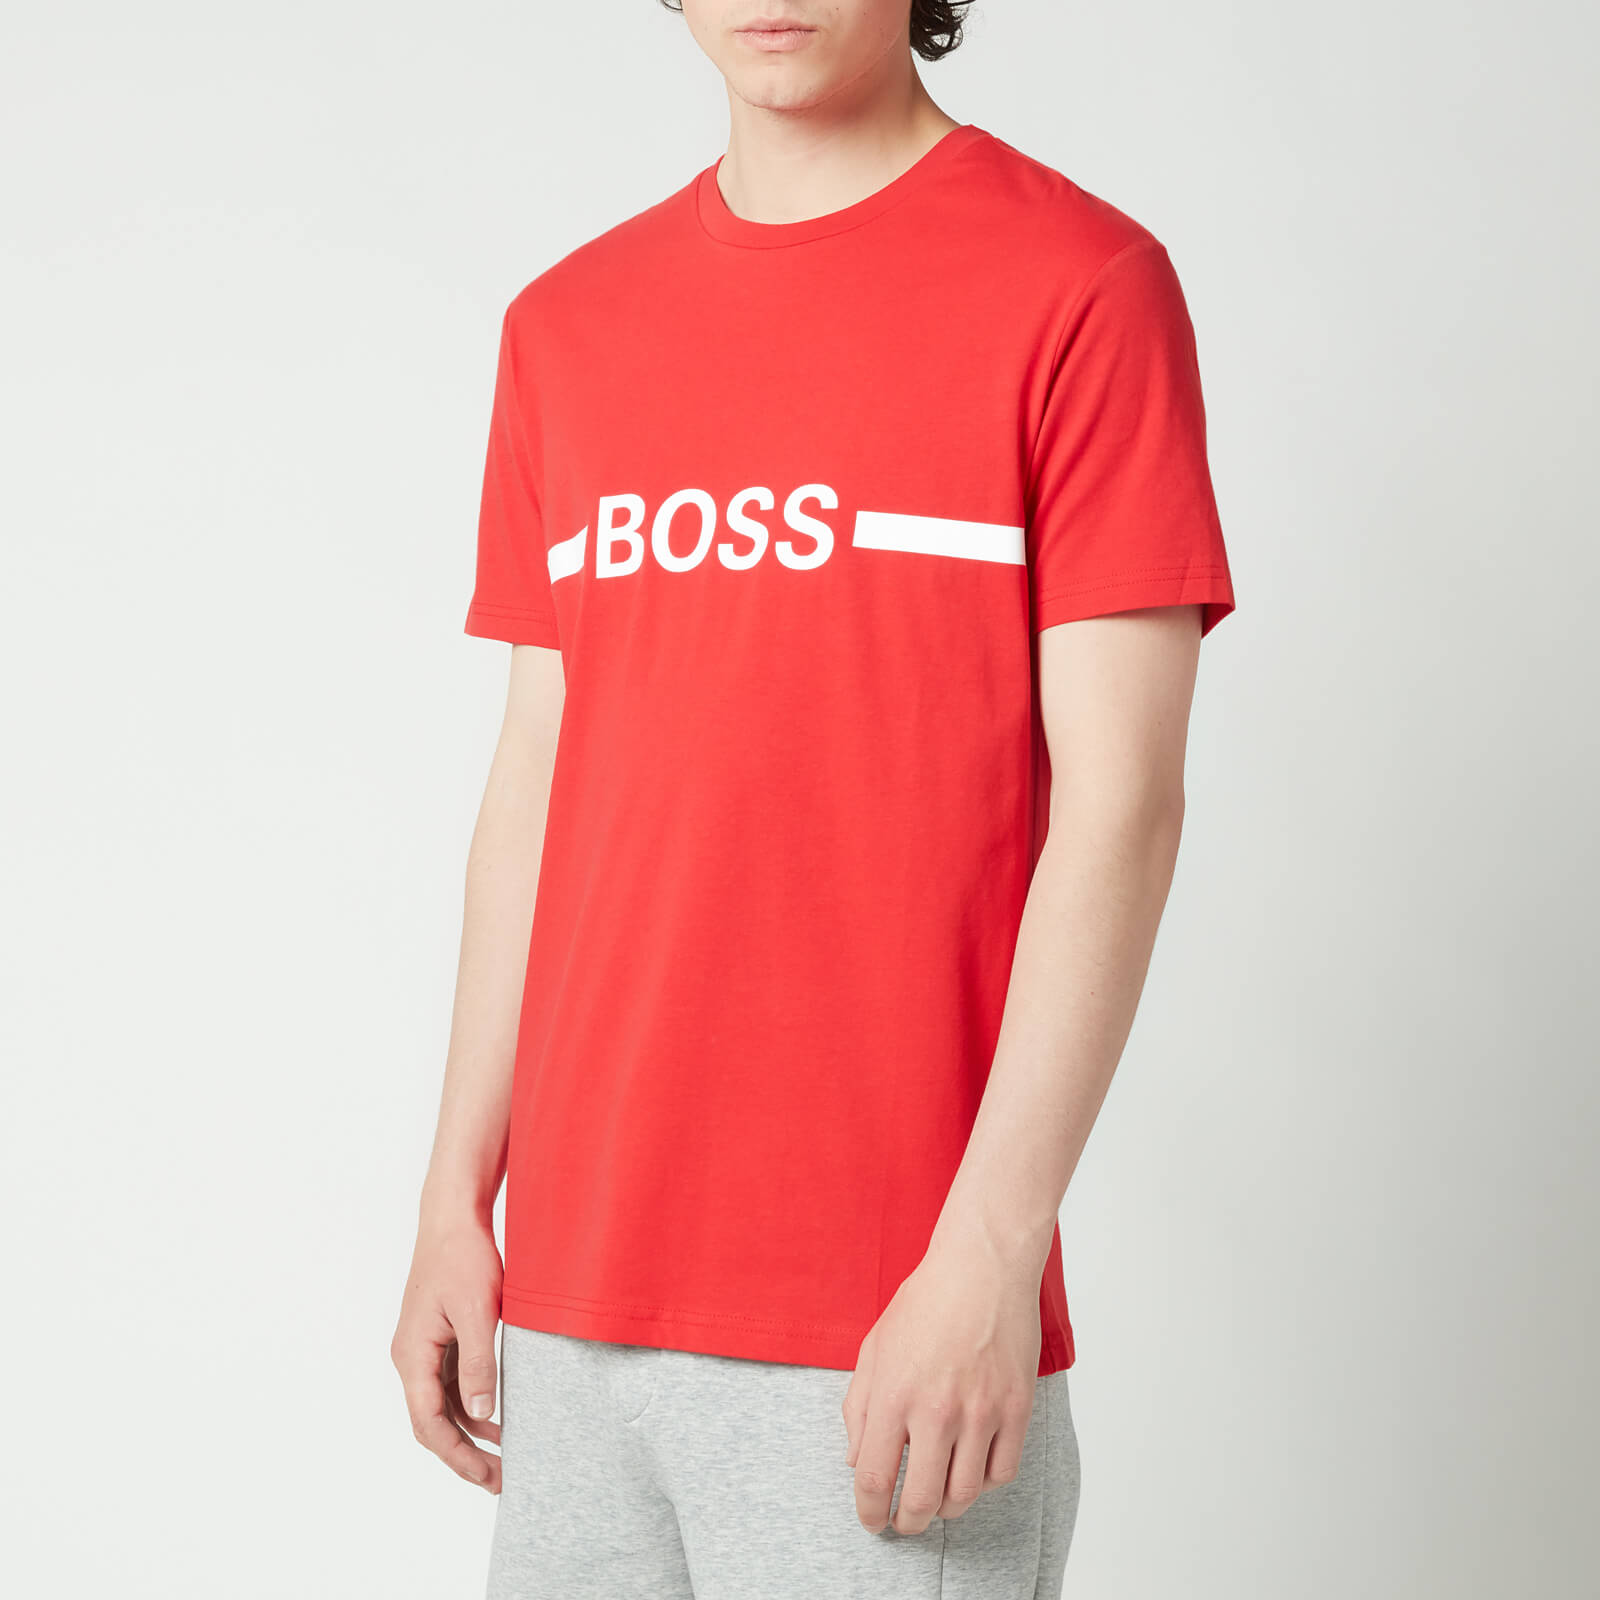 BOSS Beachwear Men's Sun Protection Slim Fit T-Shirt - Bright Red - S